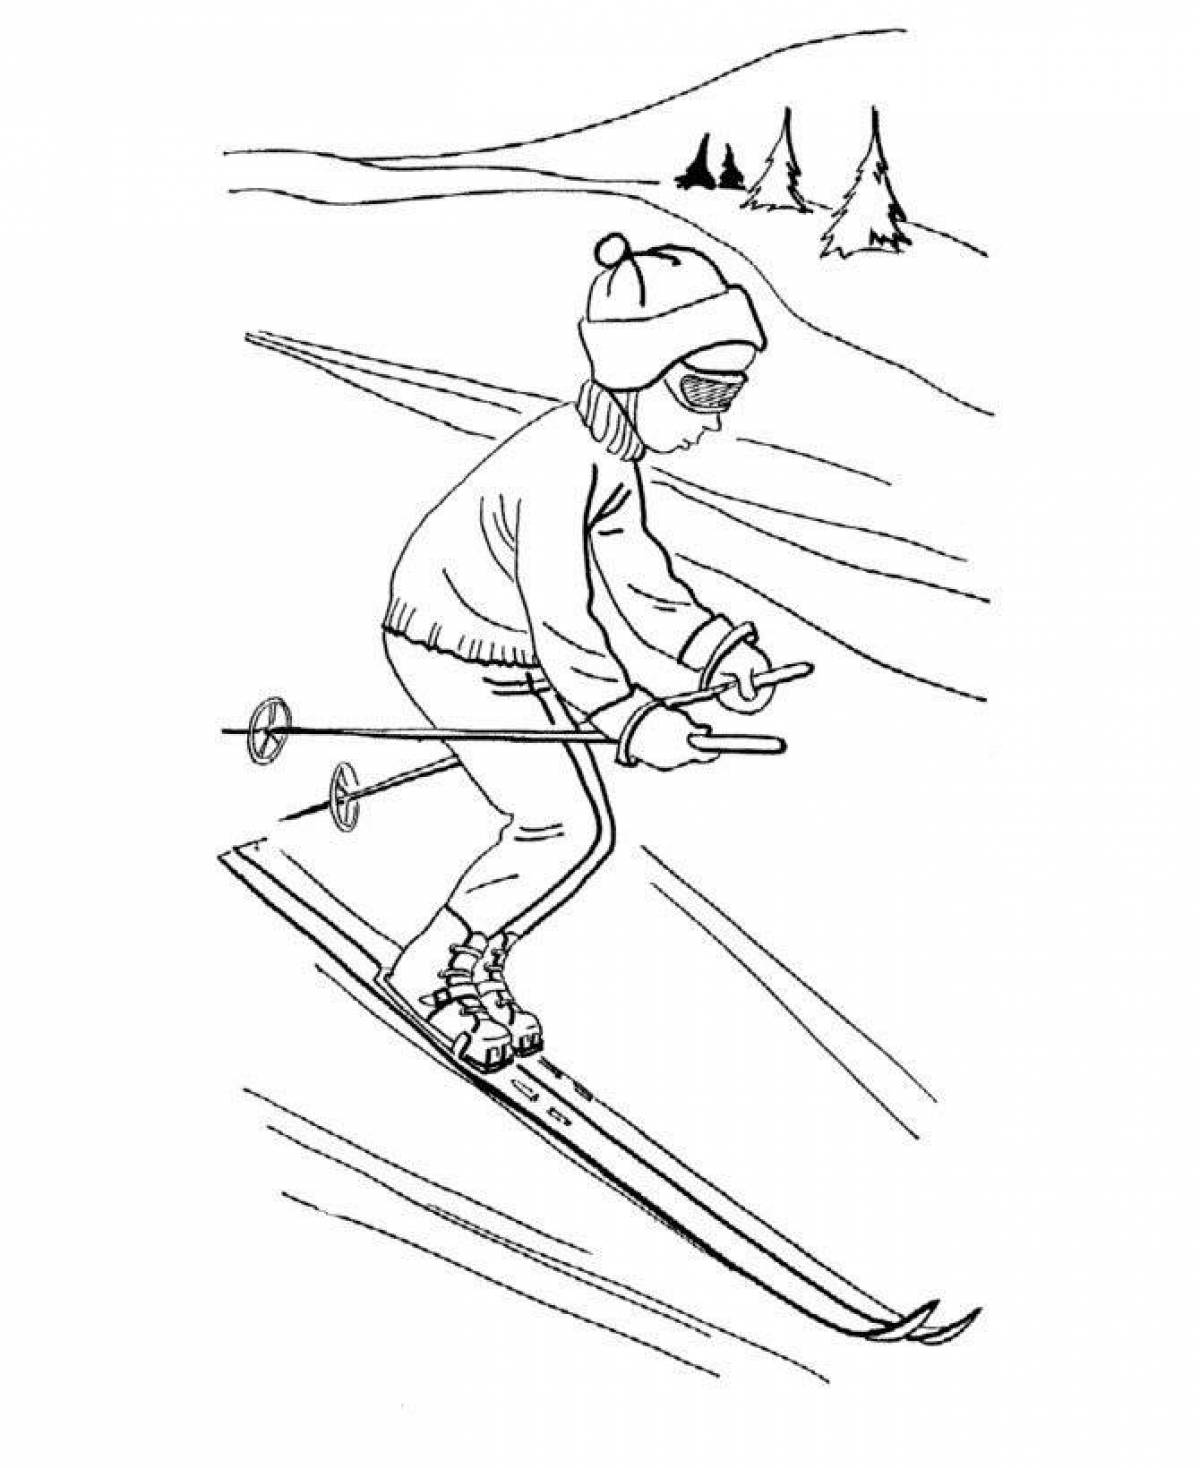 Coloring book brave skier